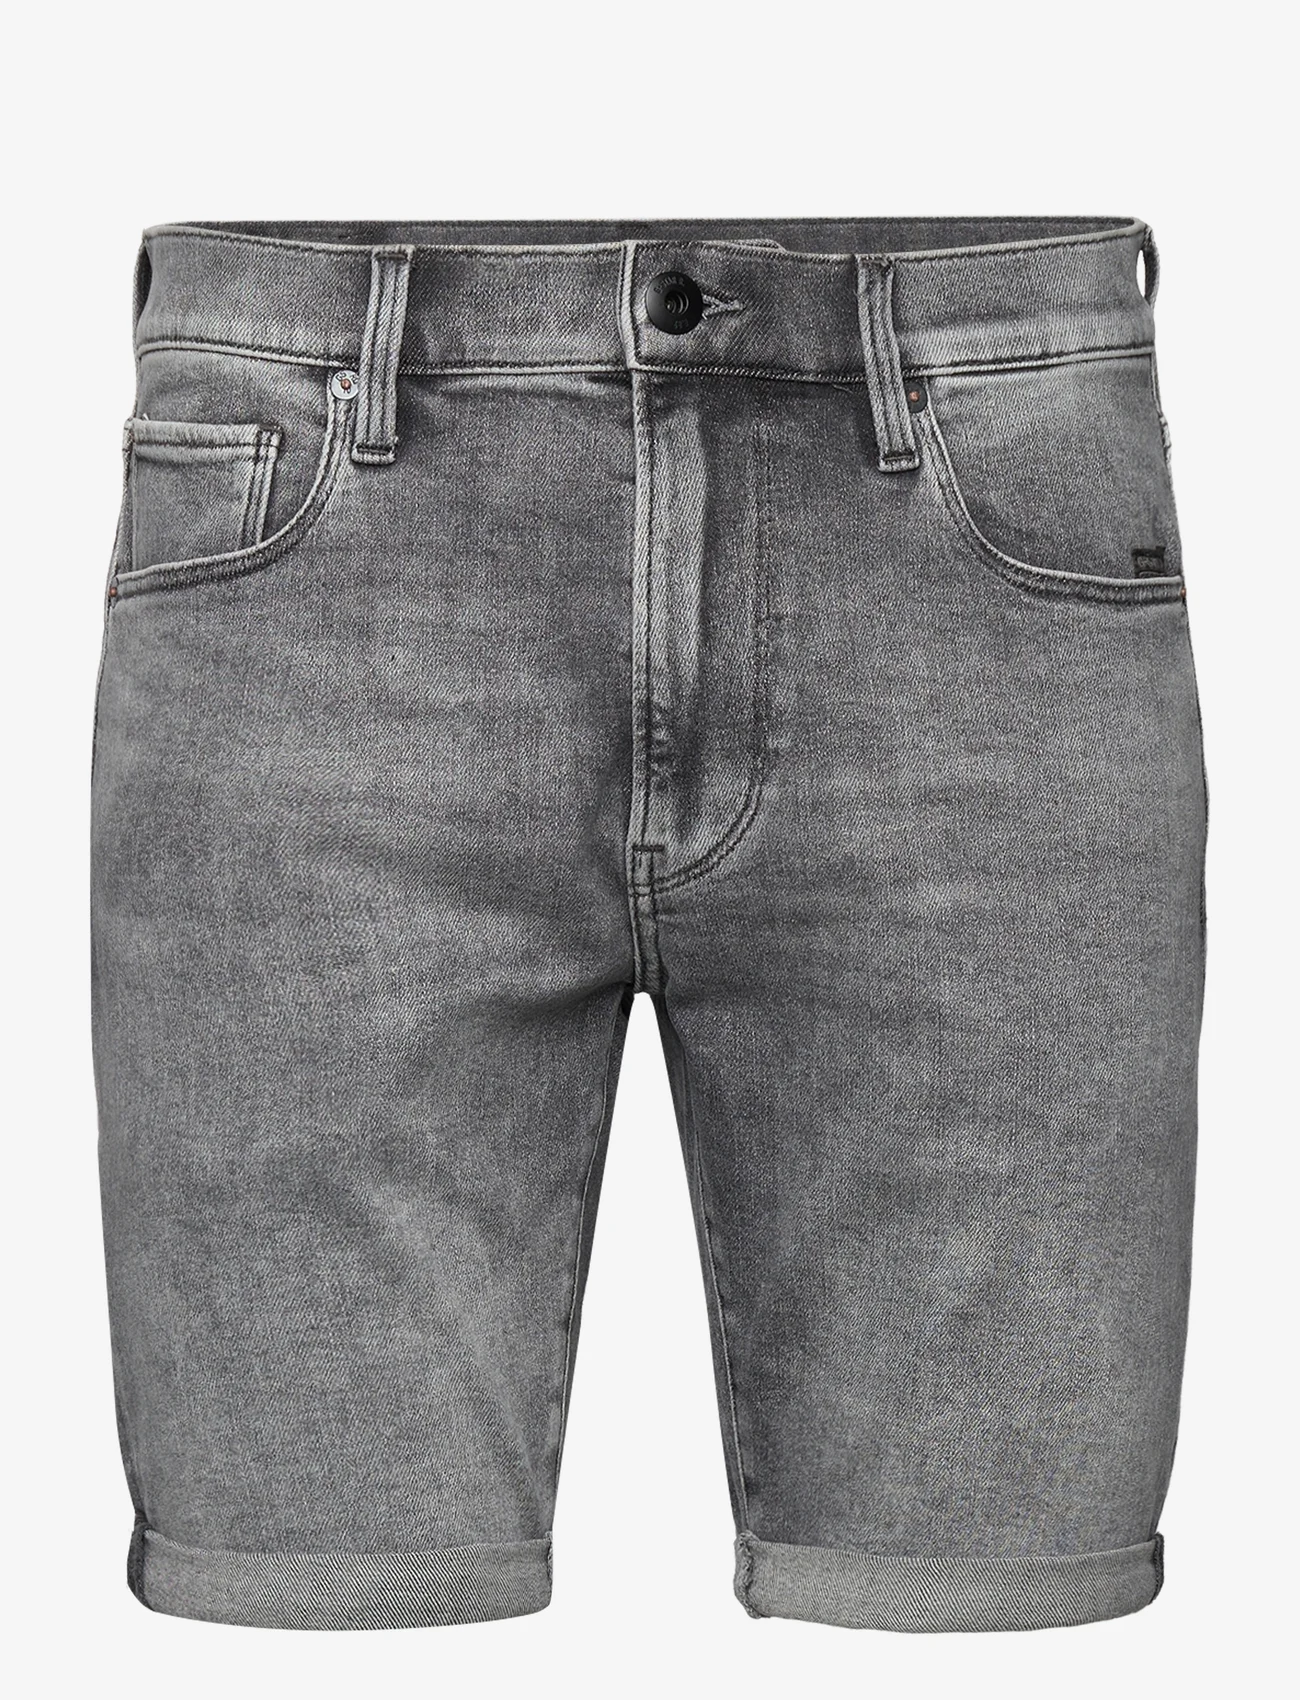 G-Star RAW - 3301 Slim Short - jeans shorts - faded grey neblina - 0